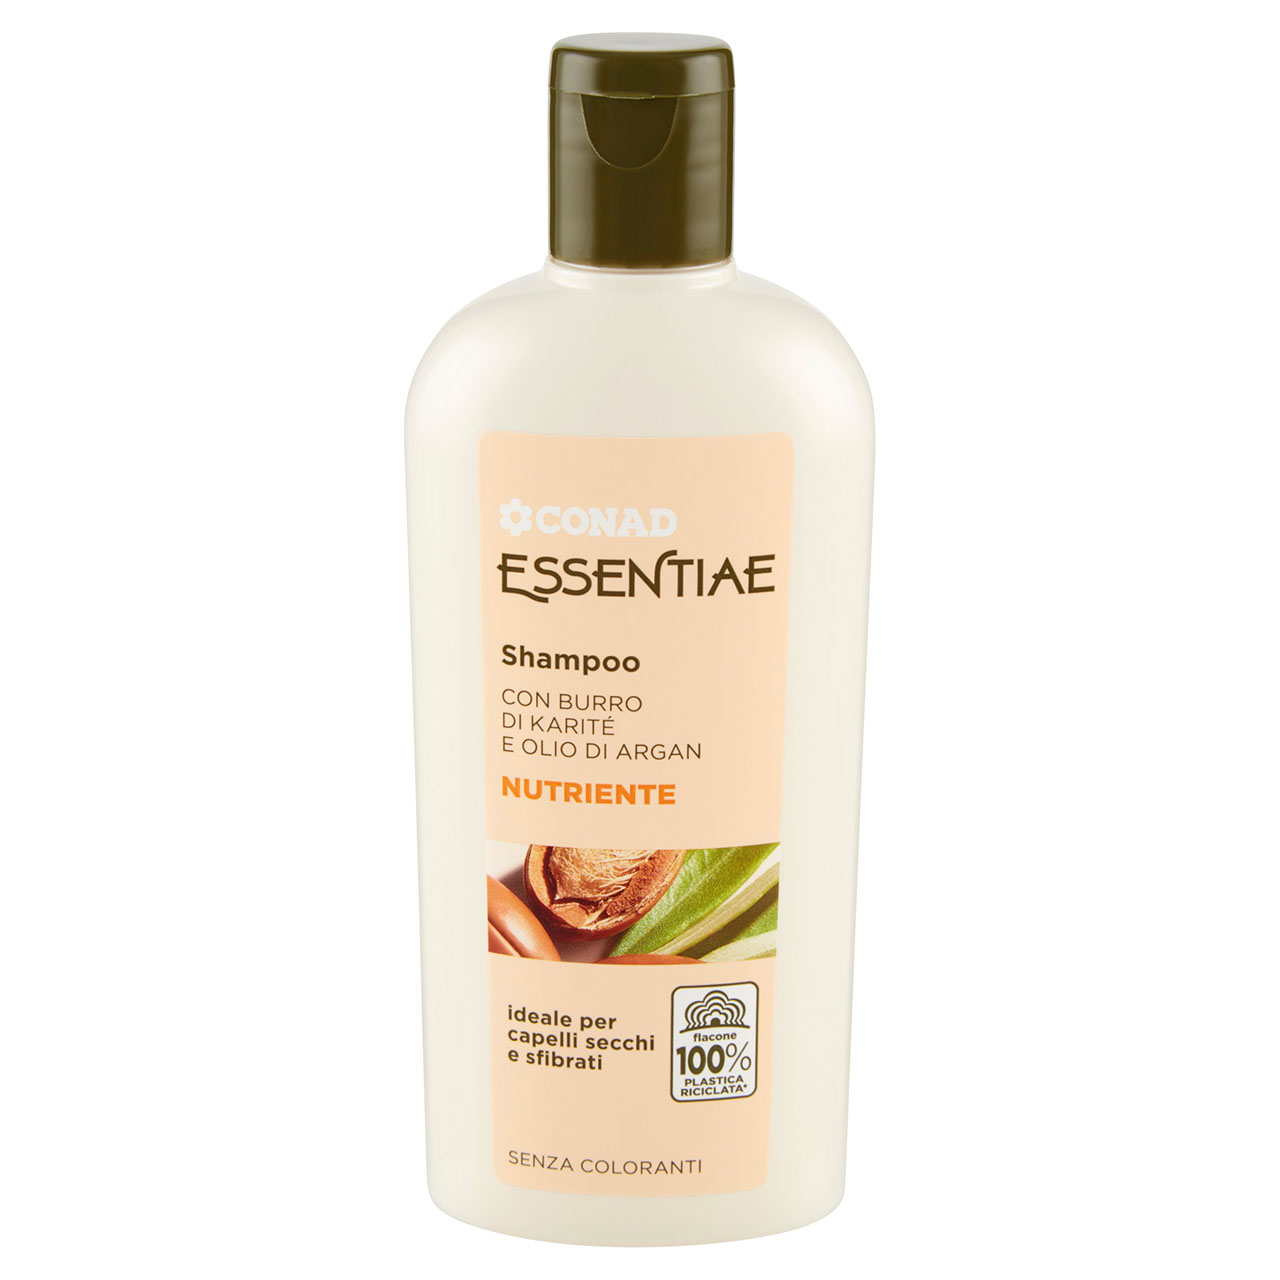 CONAD Essentiae Shampoo Nutriente 250 ml